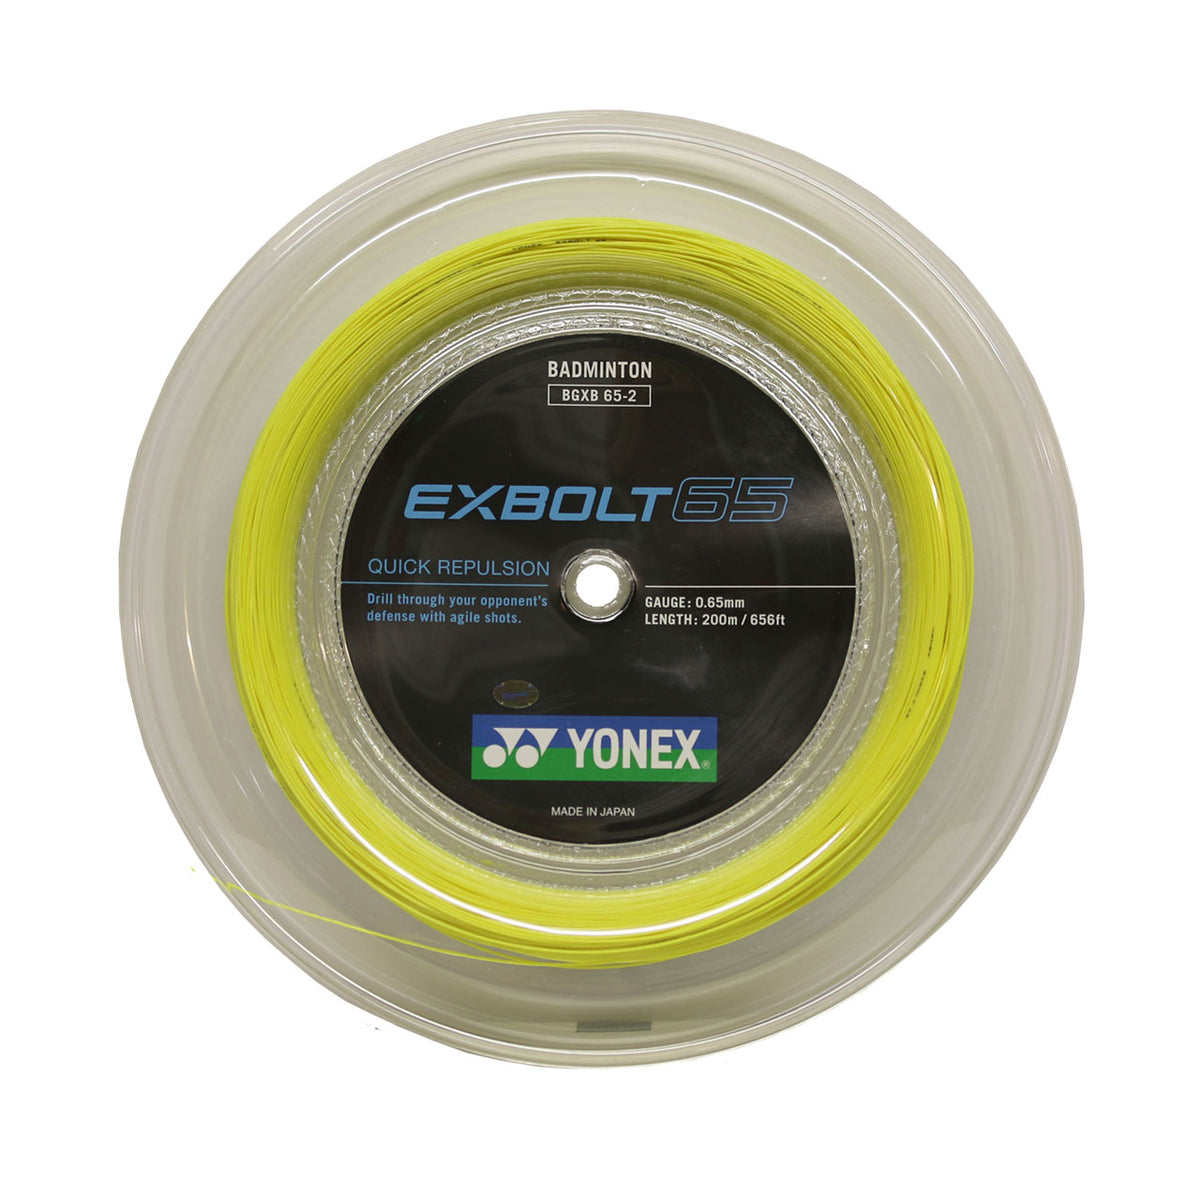 YONEX EX BOLT 65 String (200m Reel) Yellow